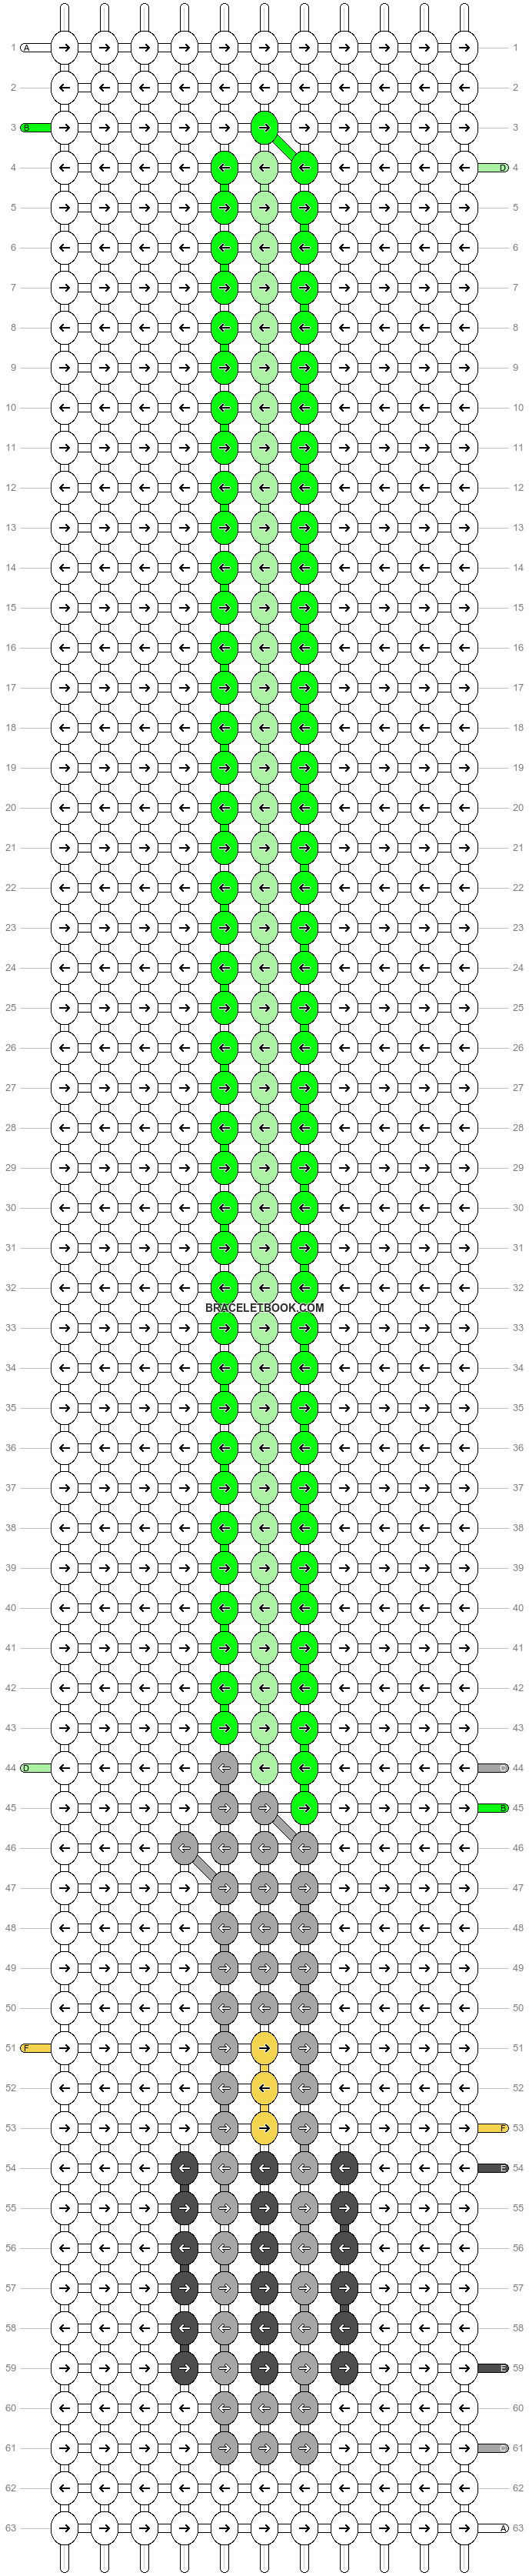 Alpha pattern #39836 variation #50376 pattern